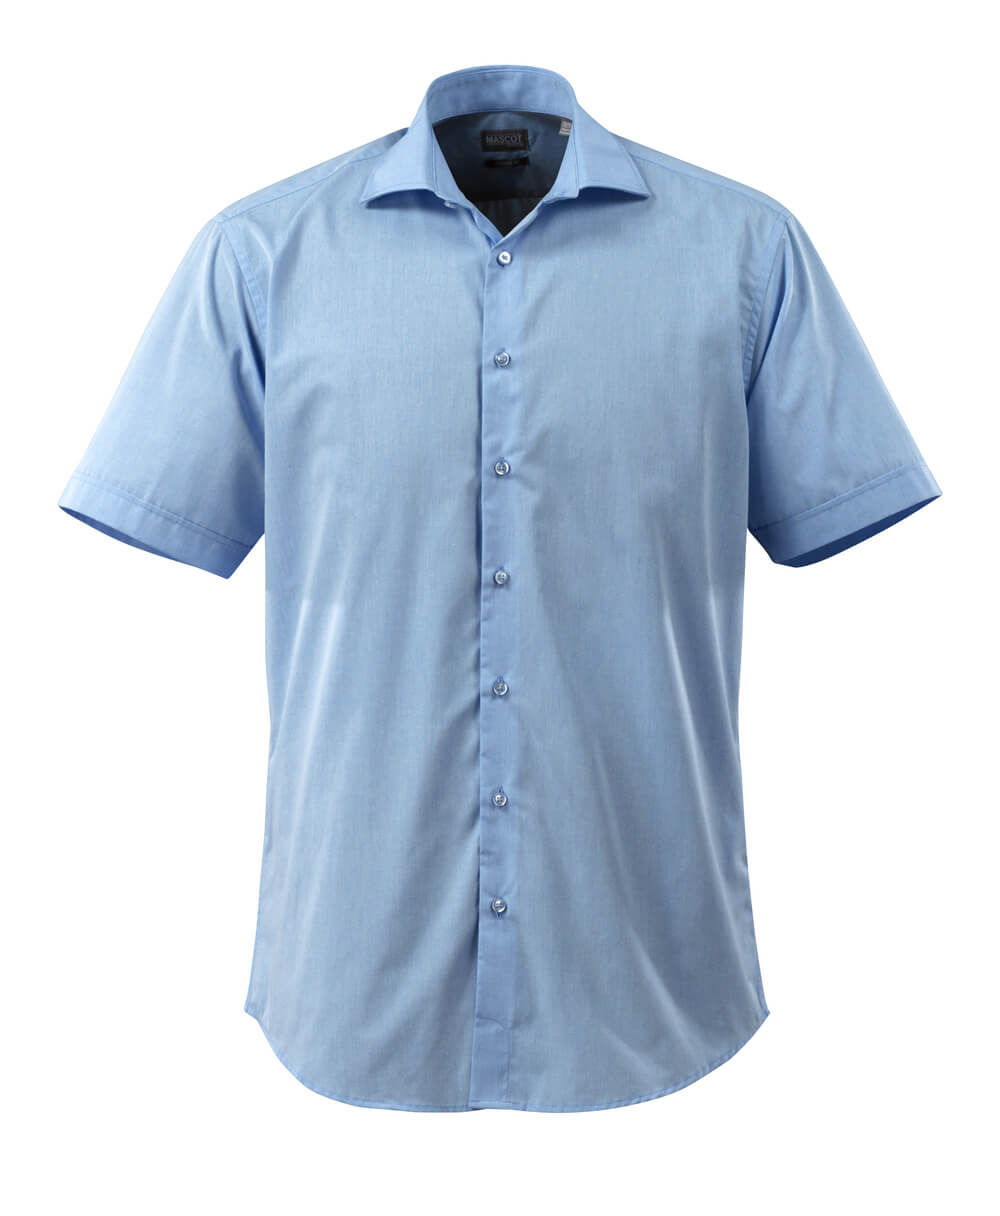 50632-984-71 Skjorte, kortærmet - lys blå